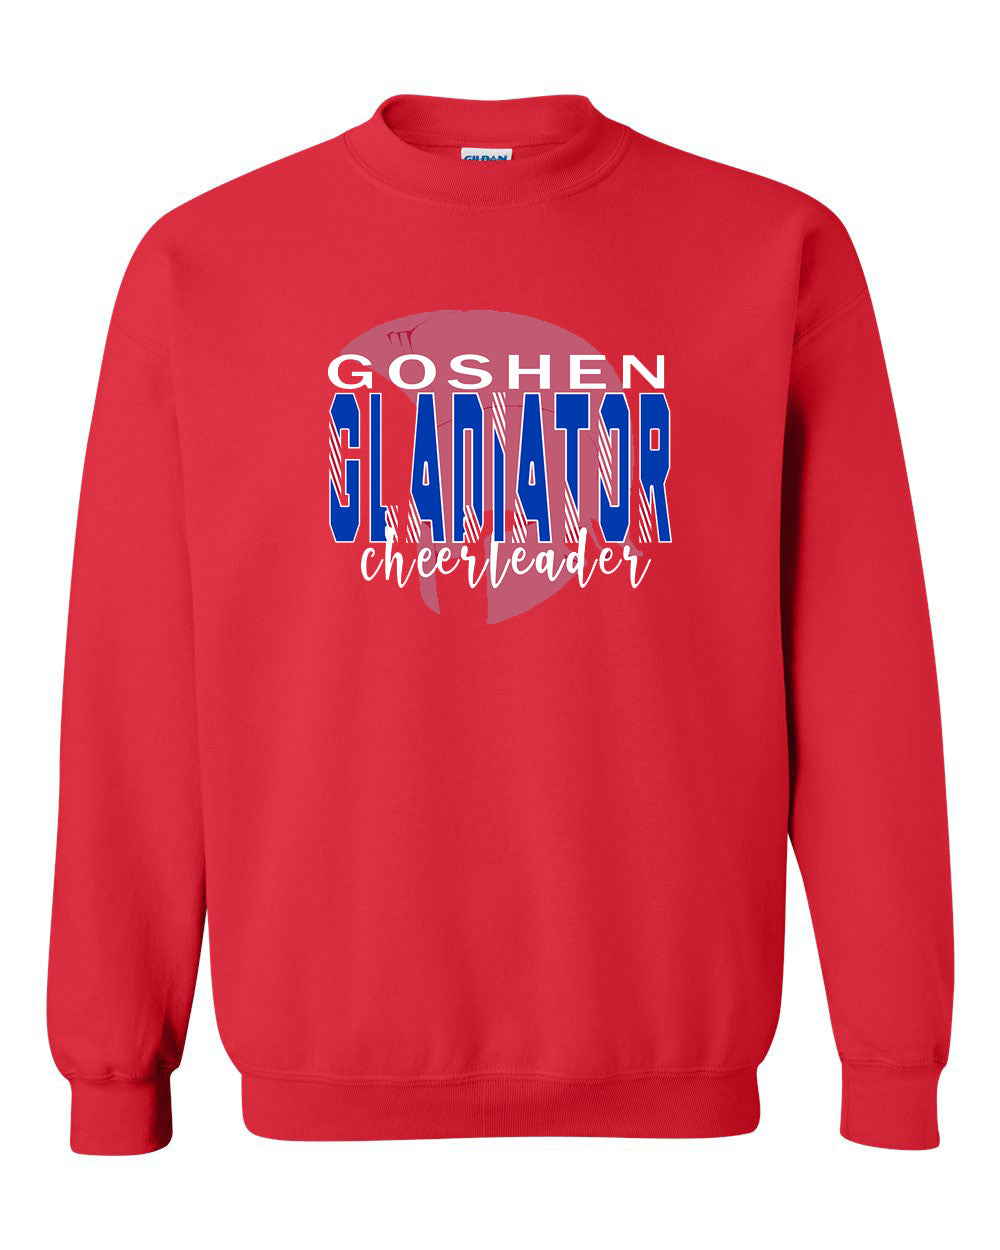 Goshen Gladiator Cheerleader non hooded sweatshirt